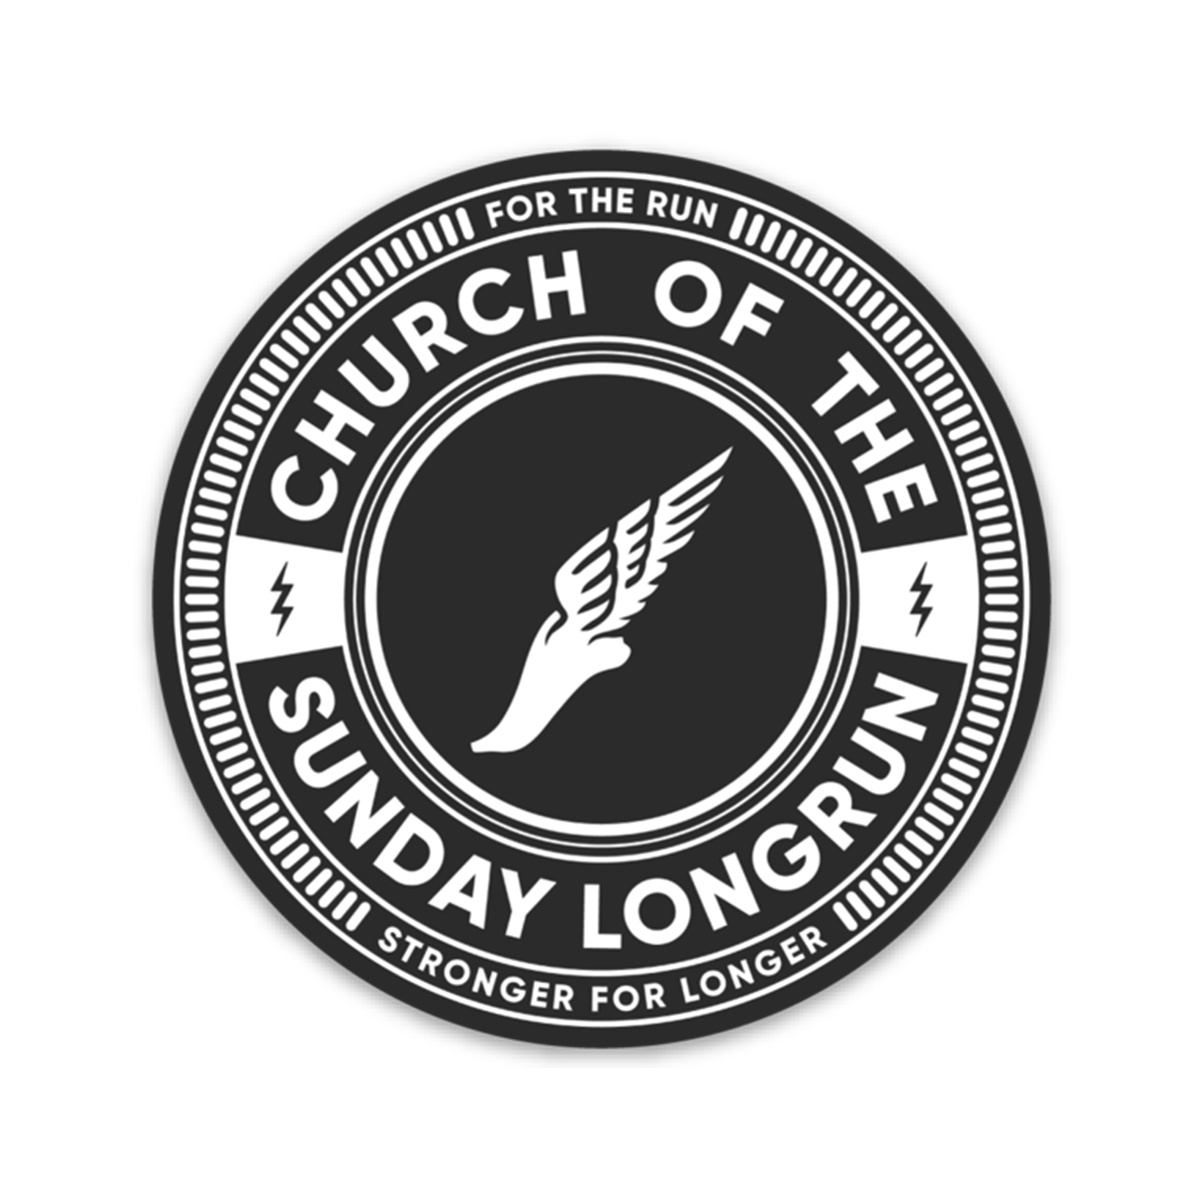 Church of the Sunday Longrun - Sticker